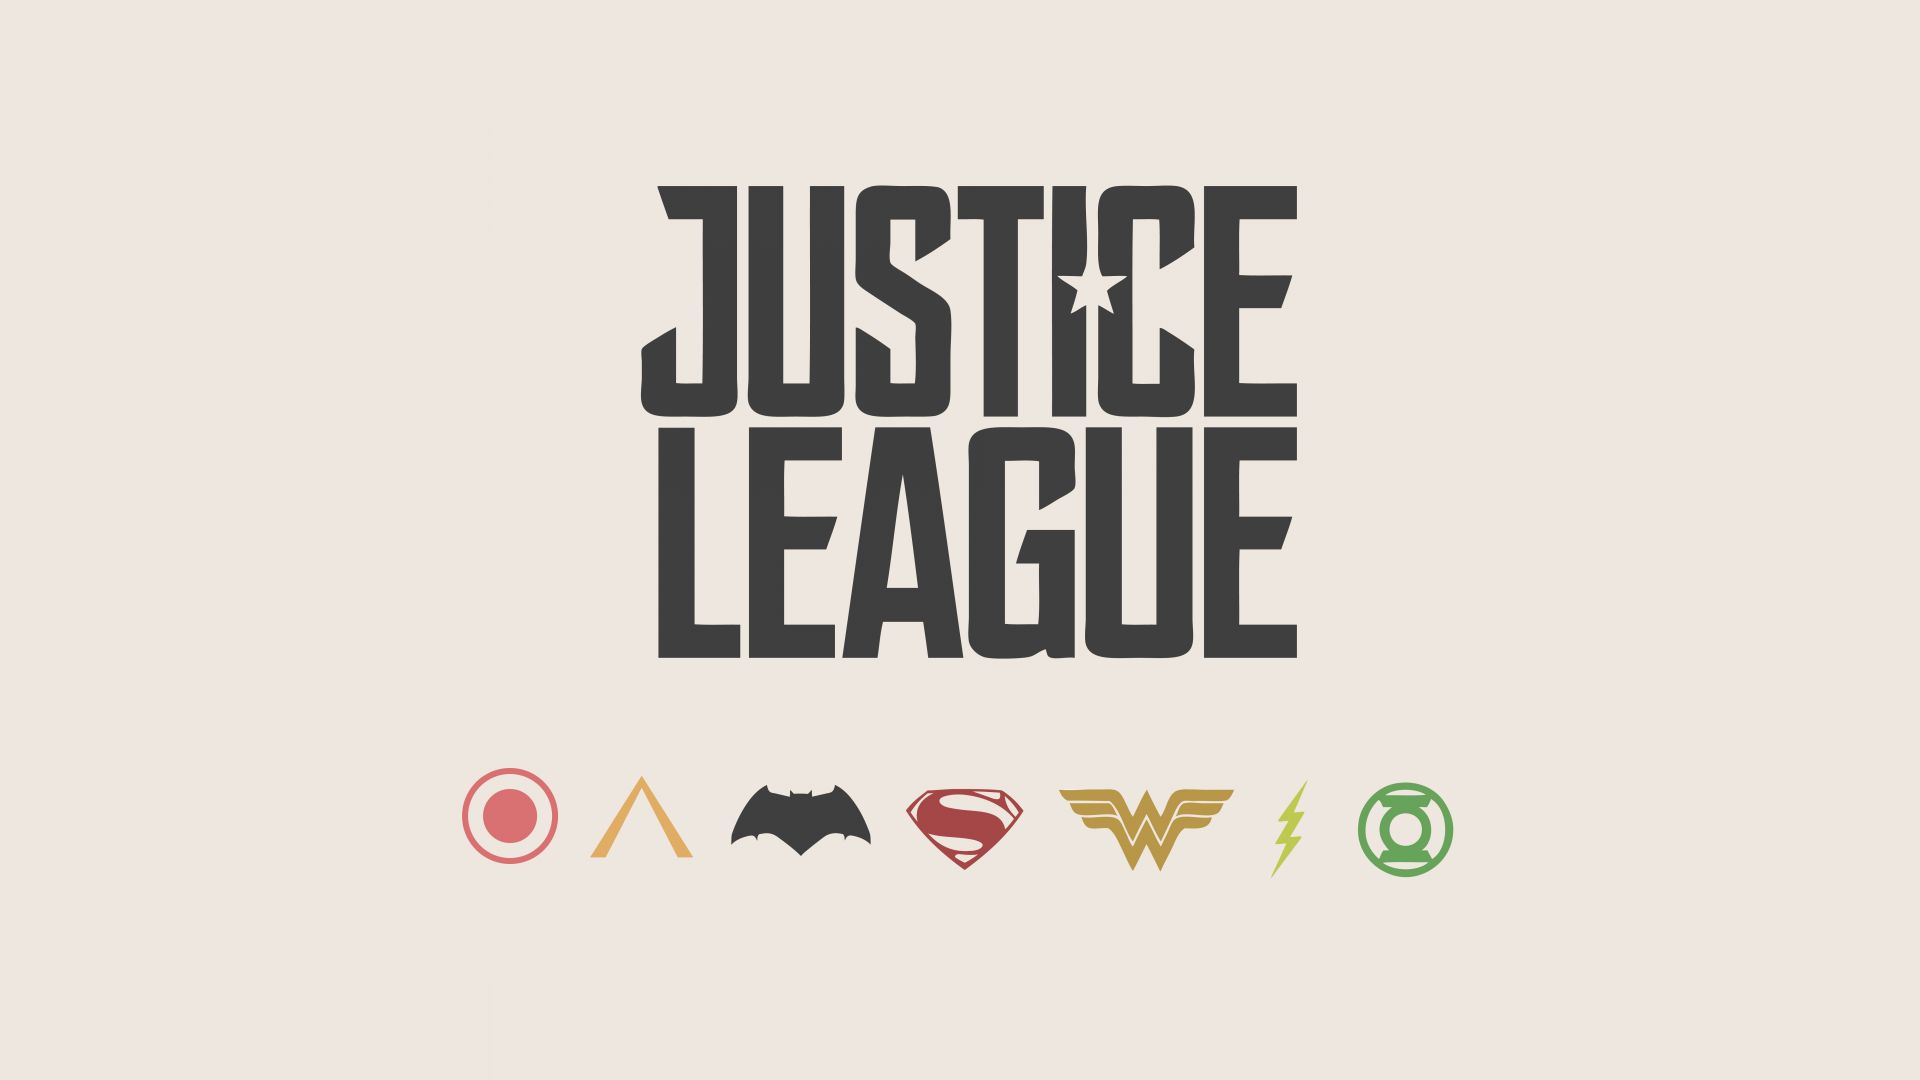 Justice League, poster, 8k (horizontal)